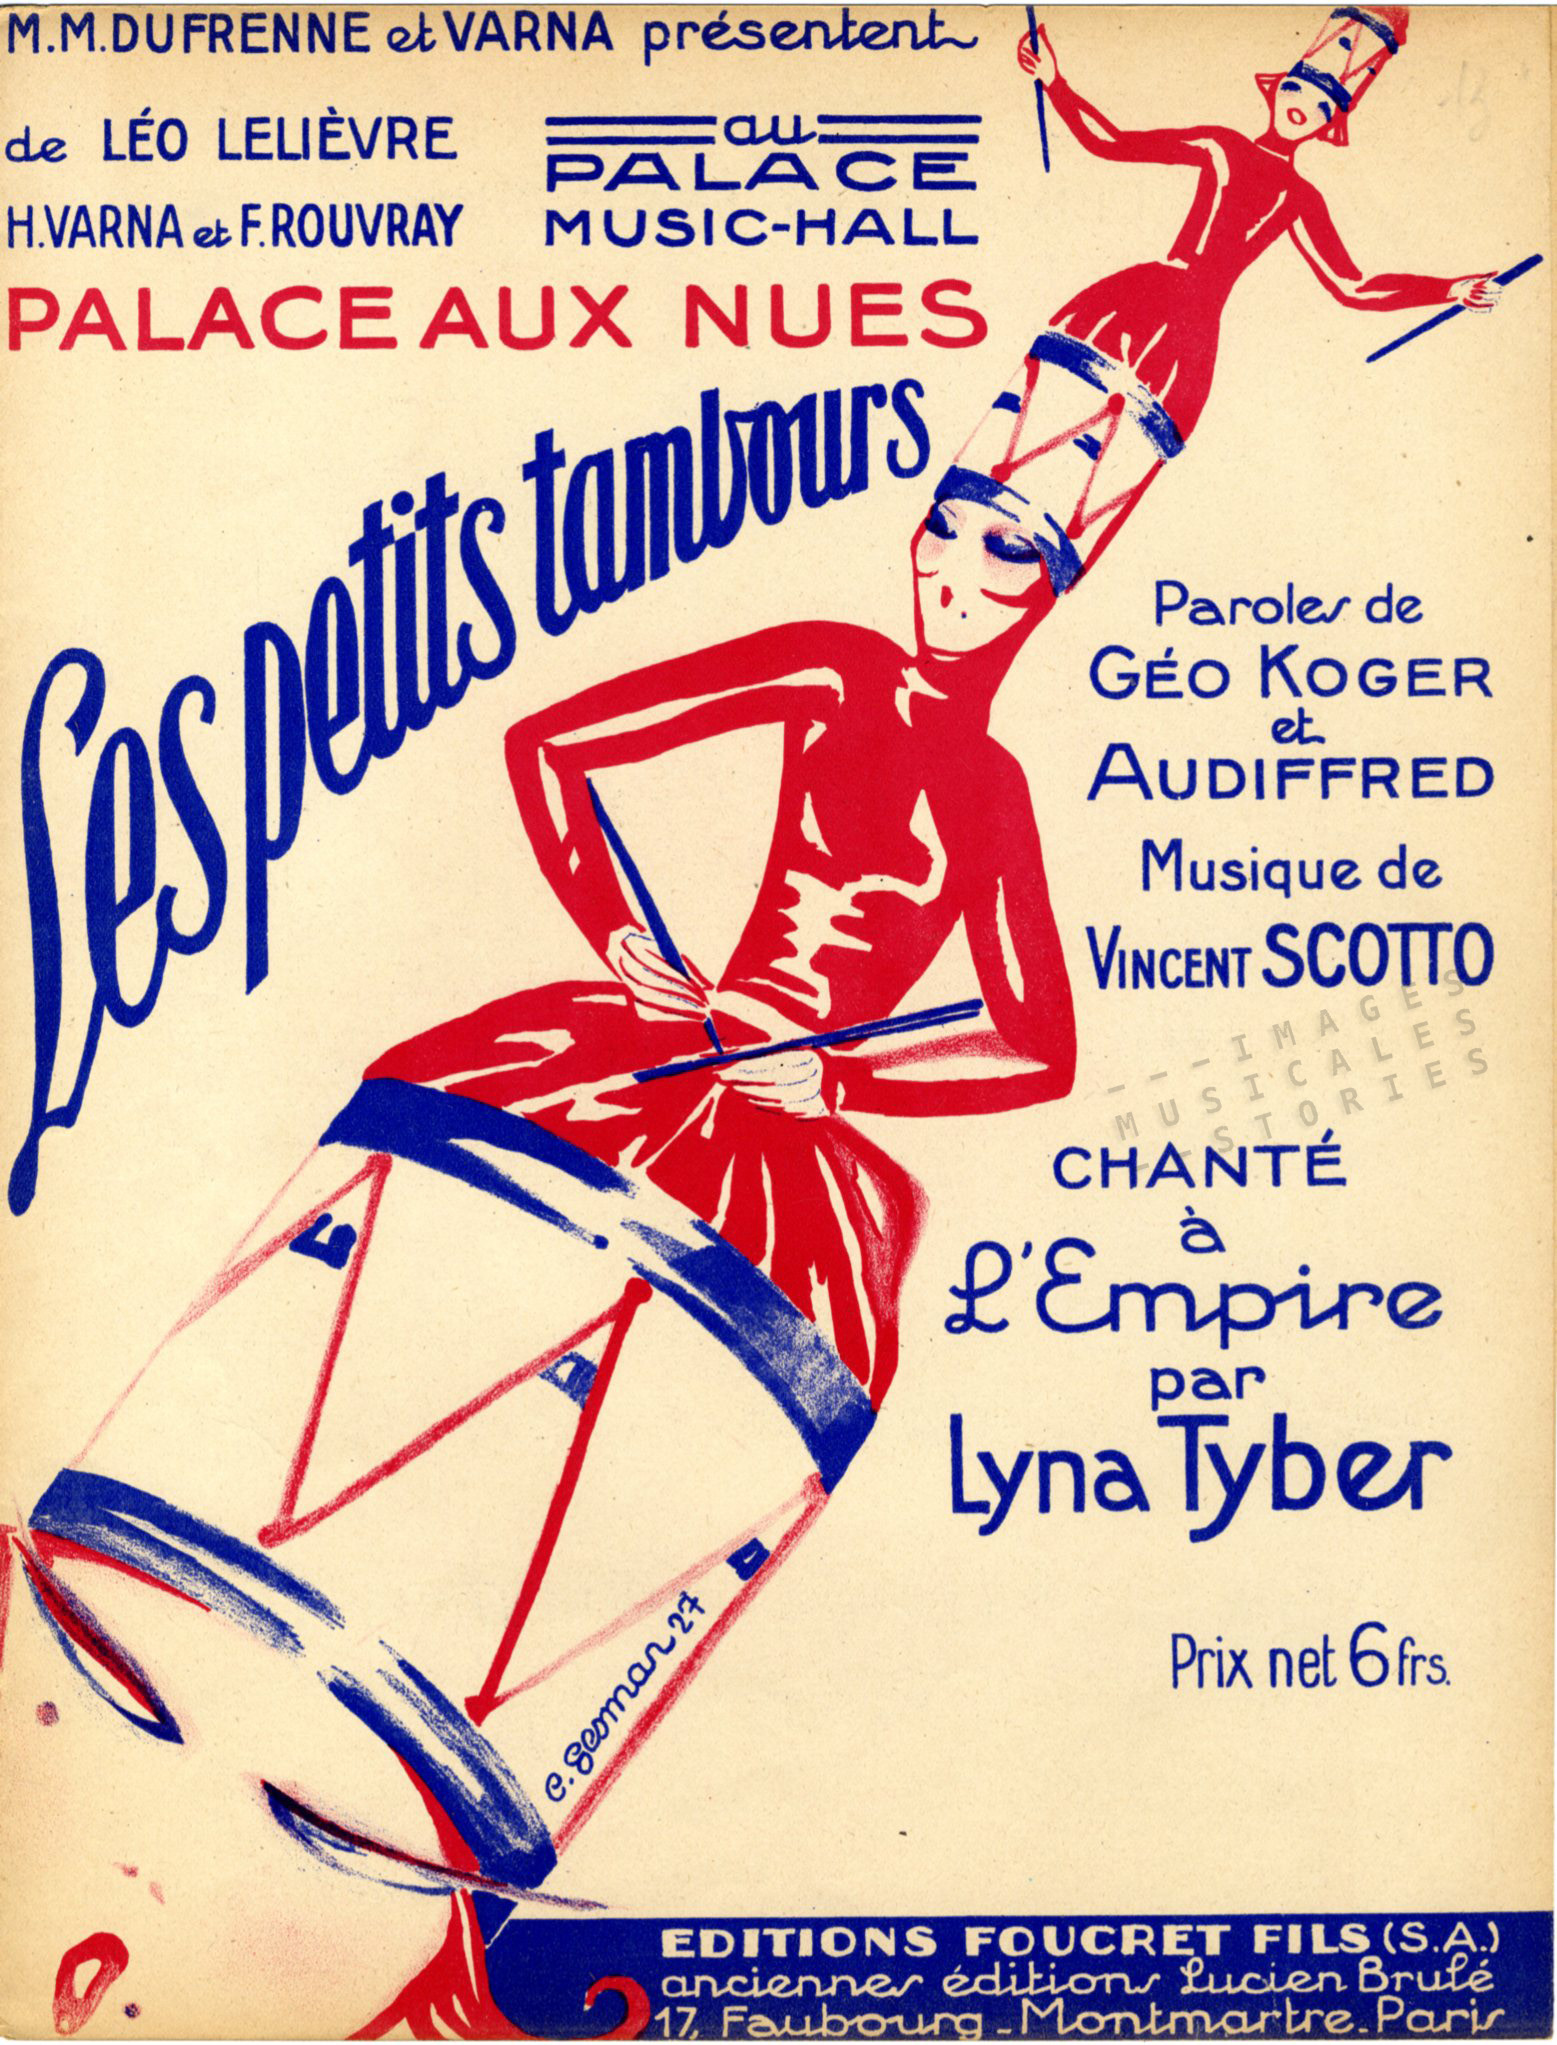 Sheet Music Cover, poster by Gesmar (partition musicale illustrée), 1927